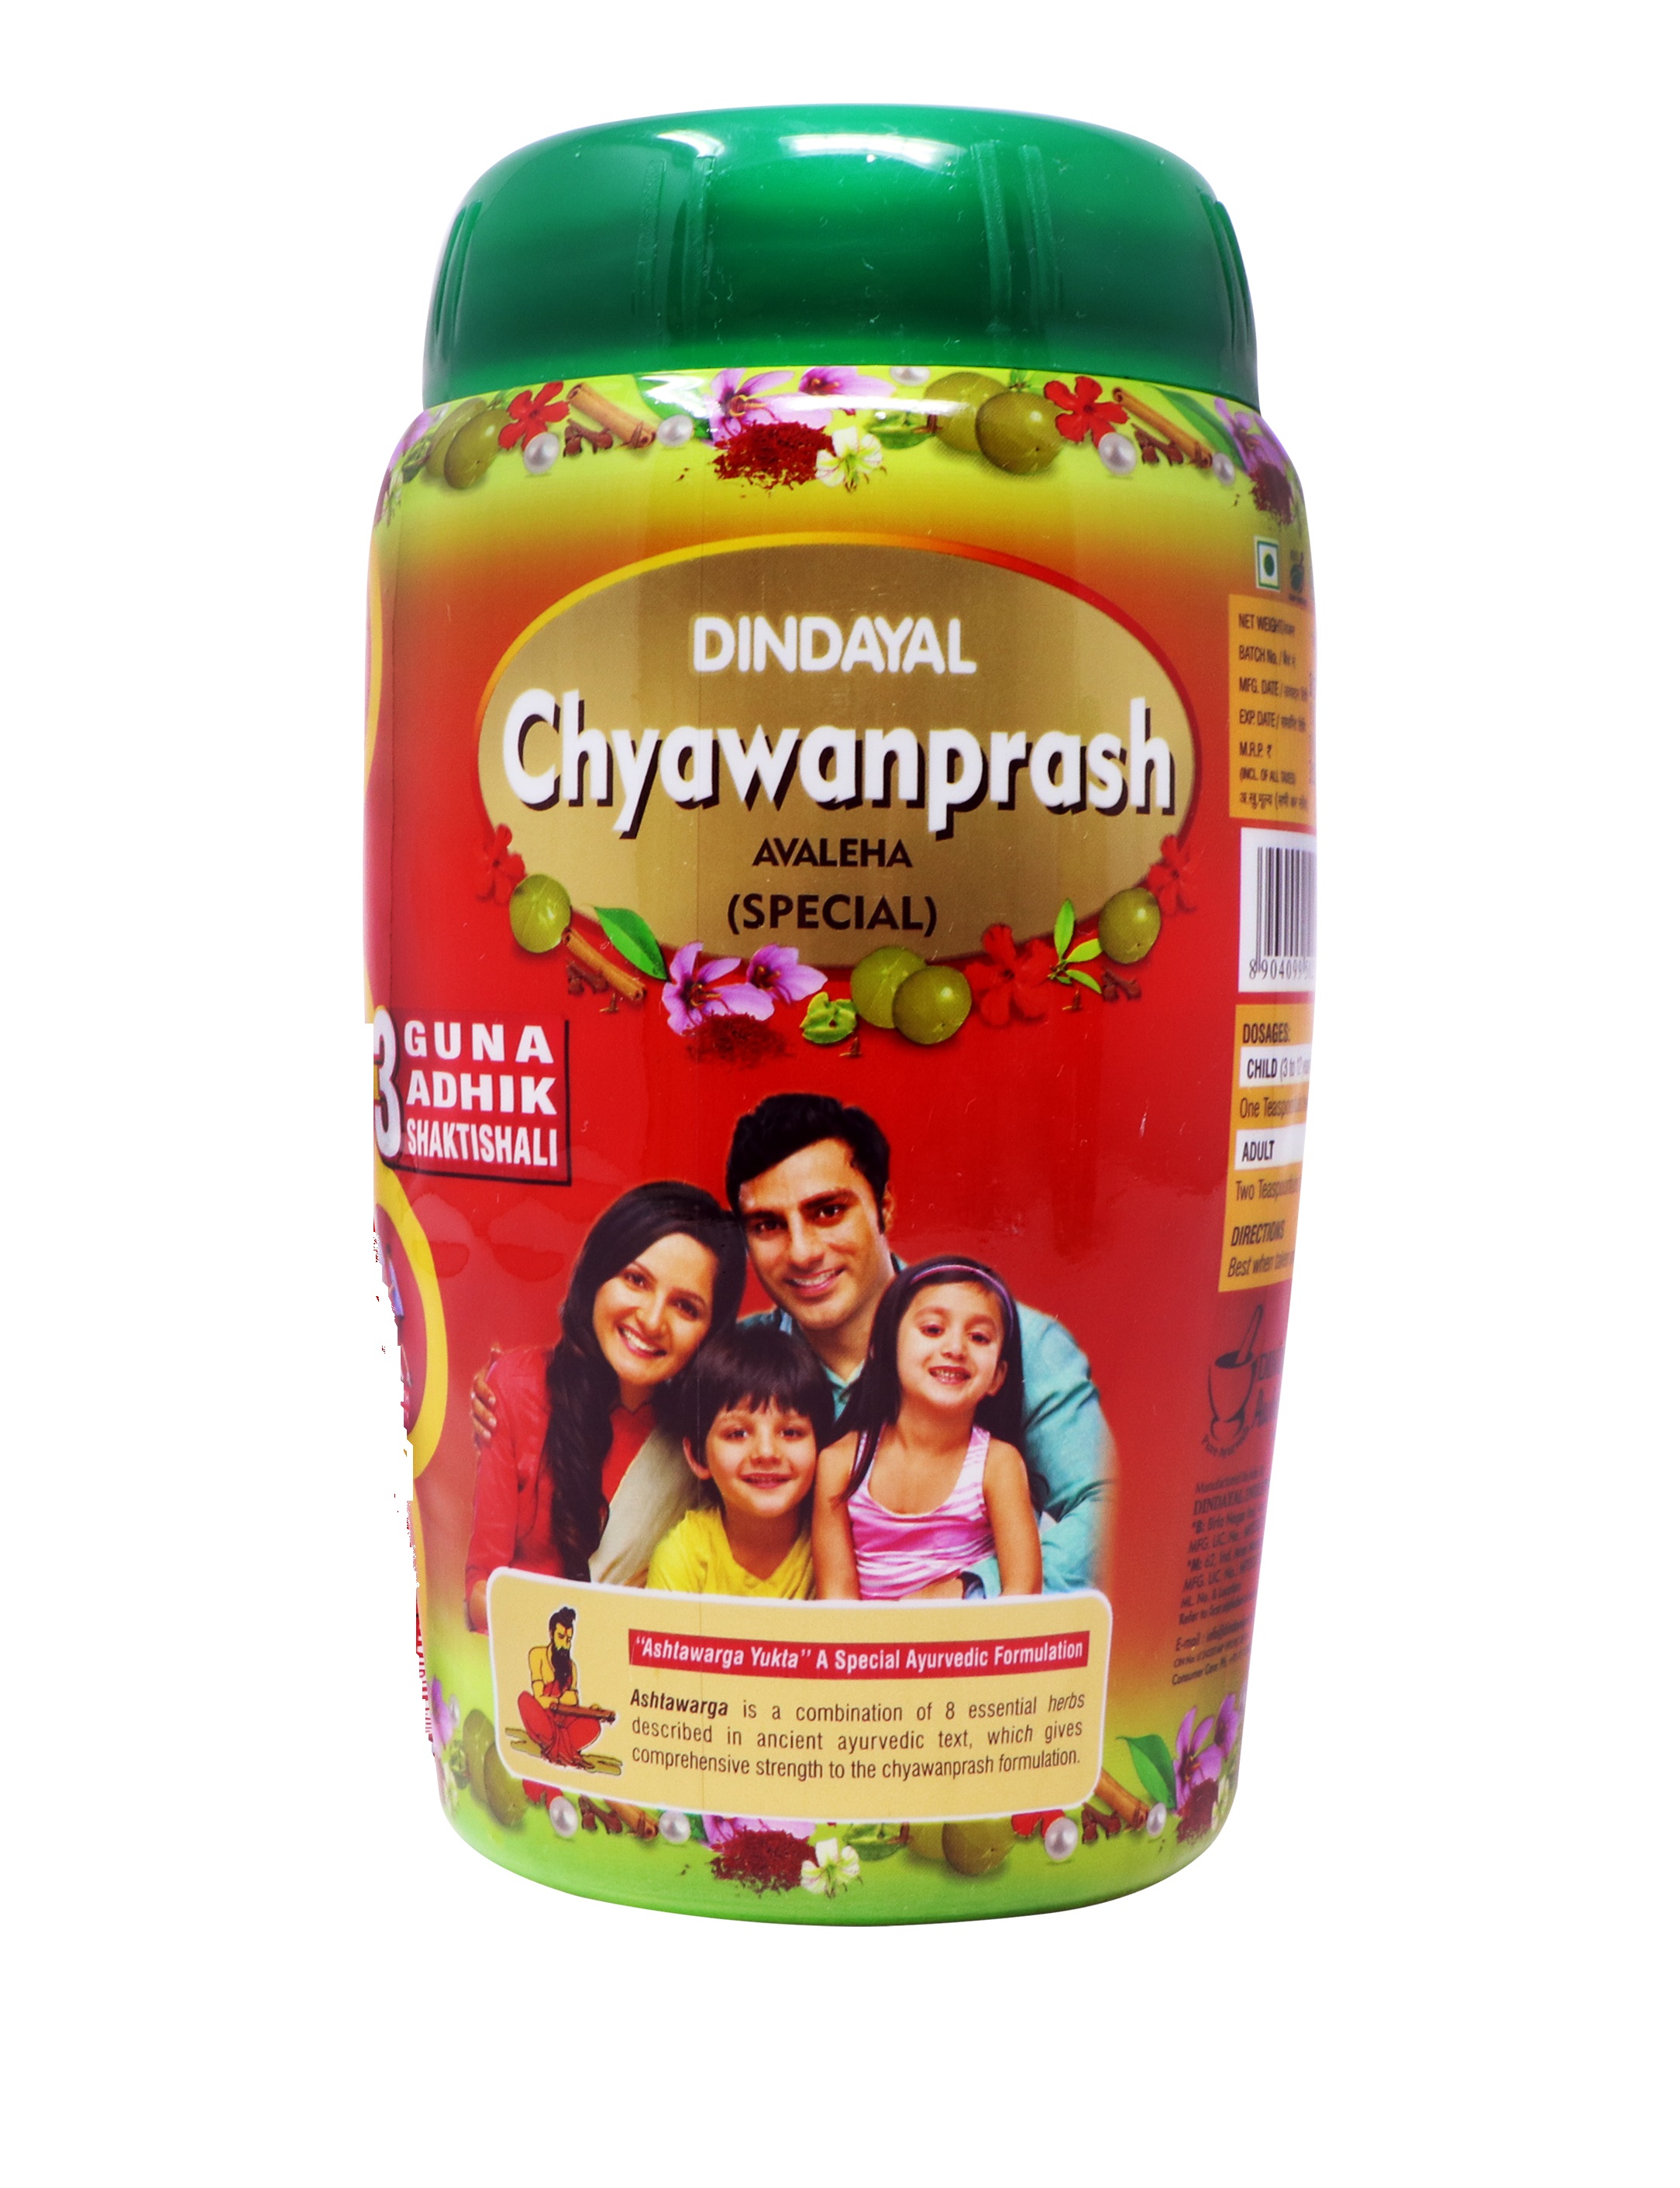 Dindayal Aushadhi Chyawanprash Avaleha (Special)